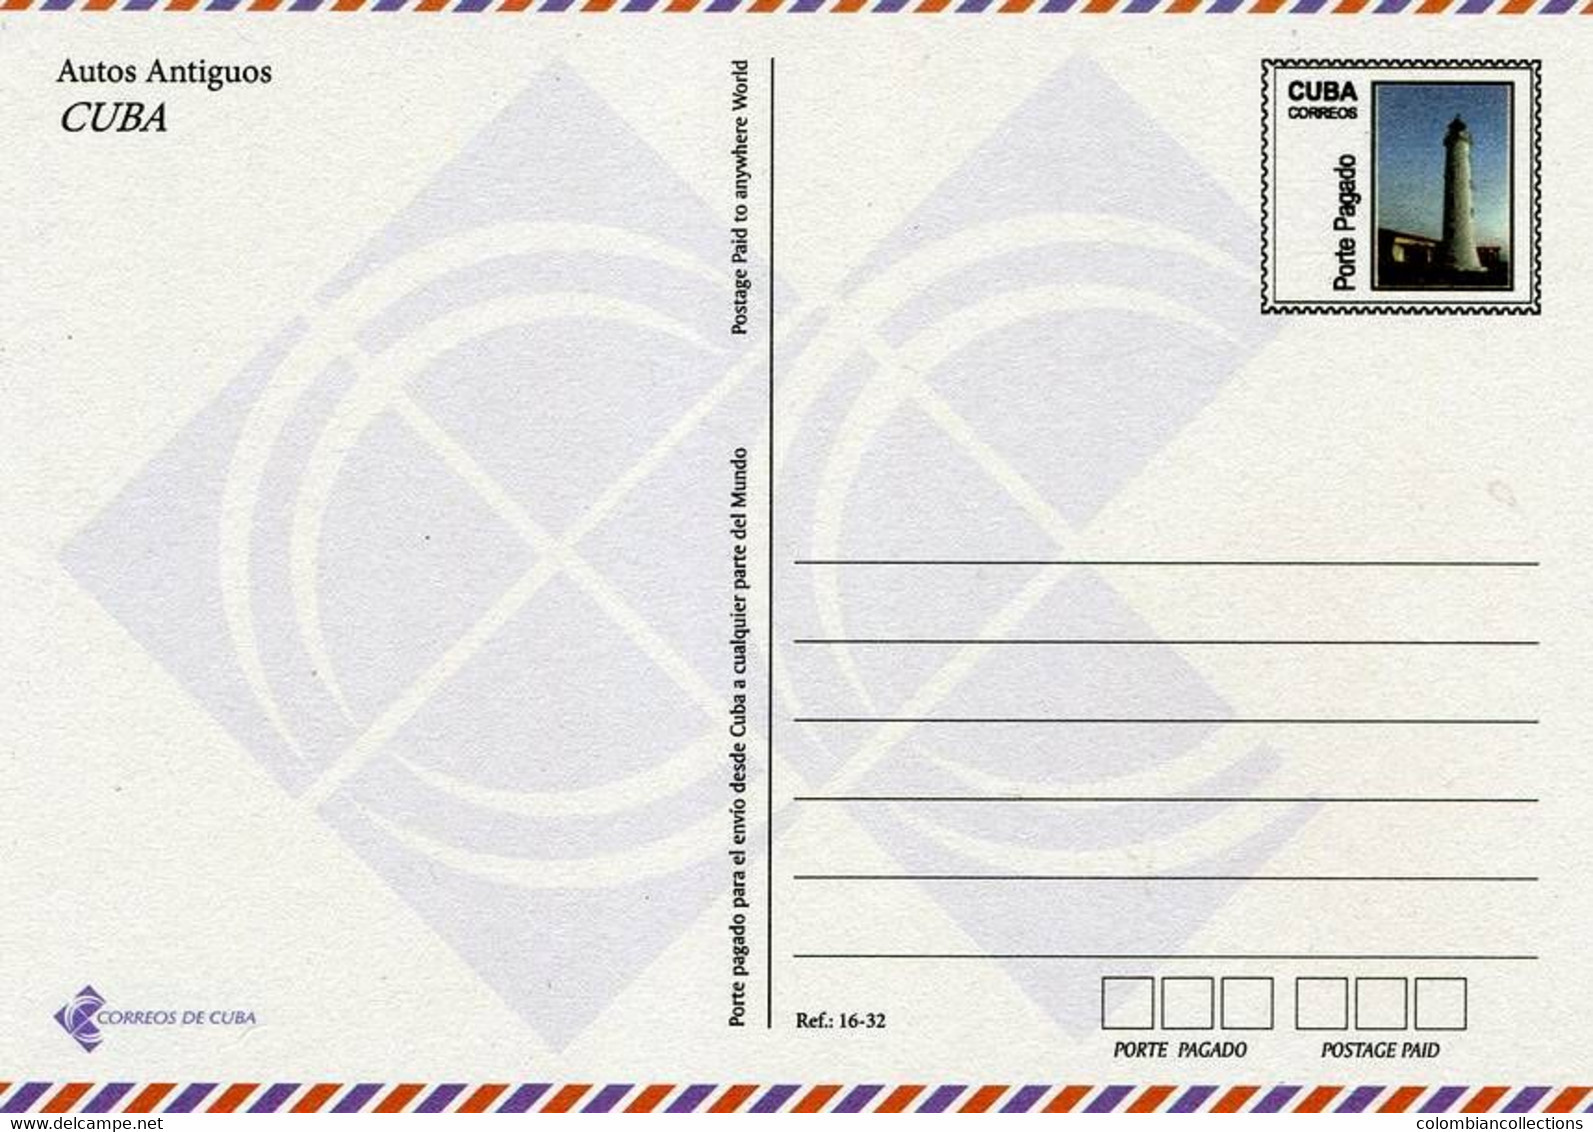 Lote PEP963a, Cuba, 2013, Entero Postal, Postal Stationary, Autos Antiguos, 16/32, Postcard. Che Guevara - Maximumkarten